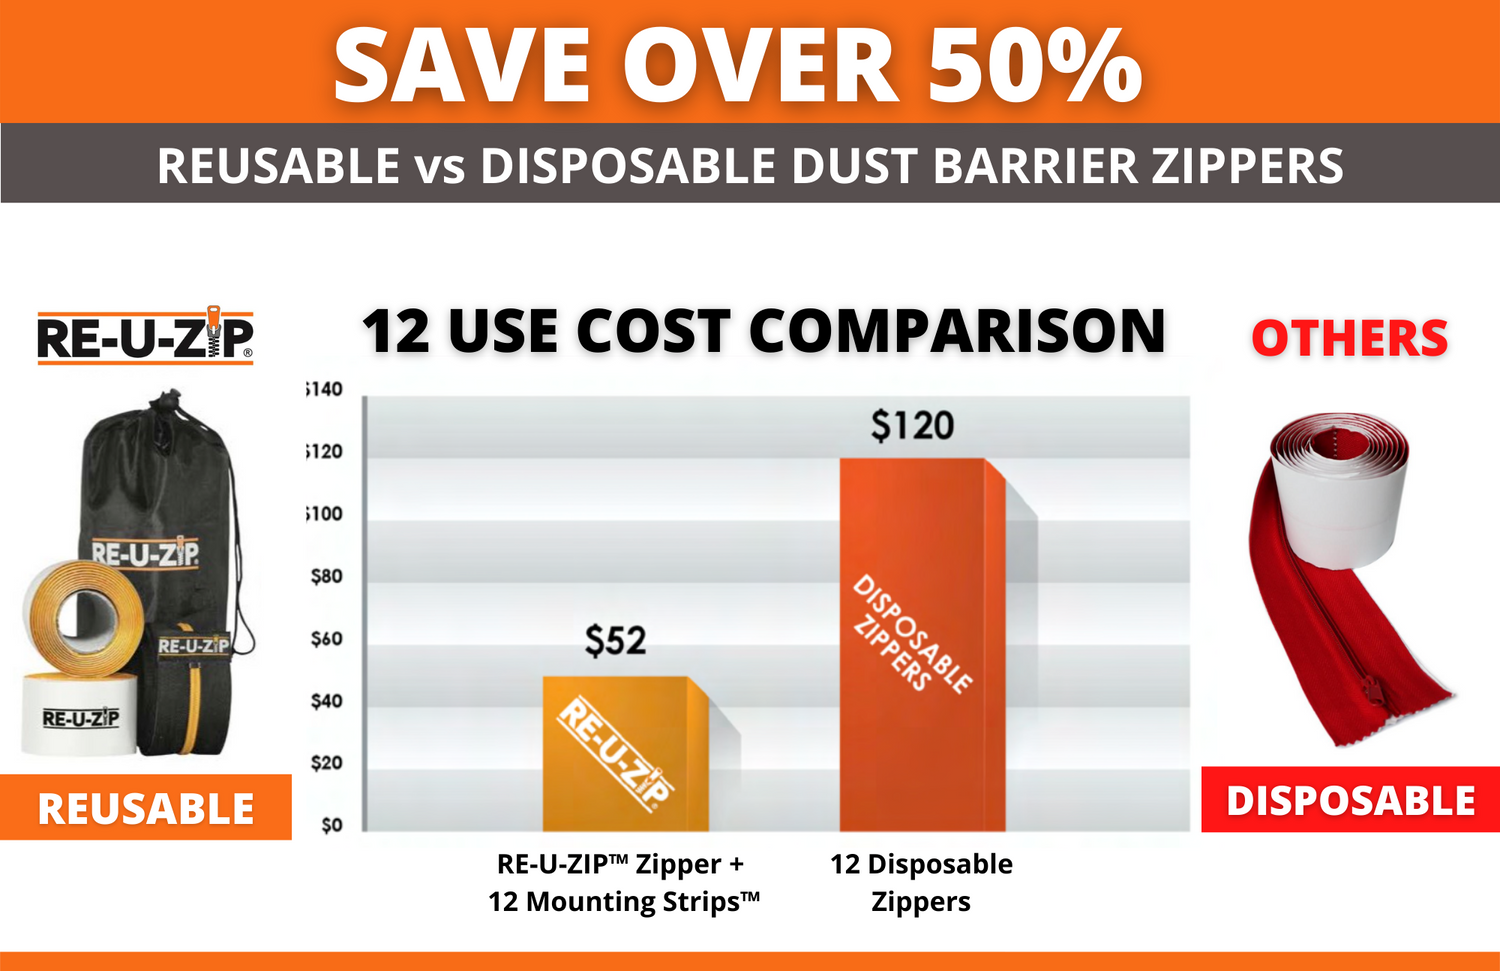 RE-U-ZIP Reusable Dust Barrier Zipper Cost Comparison